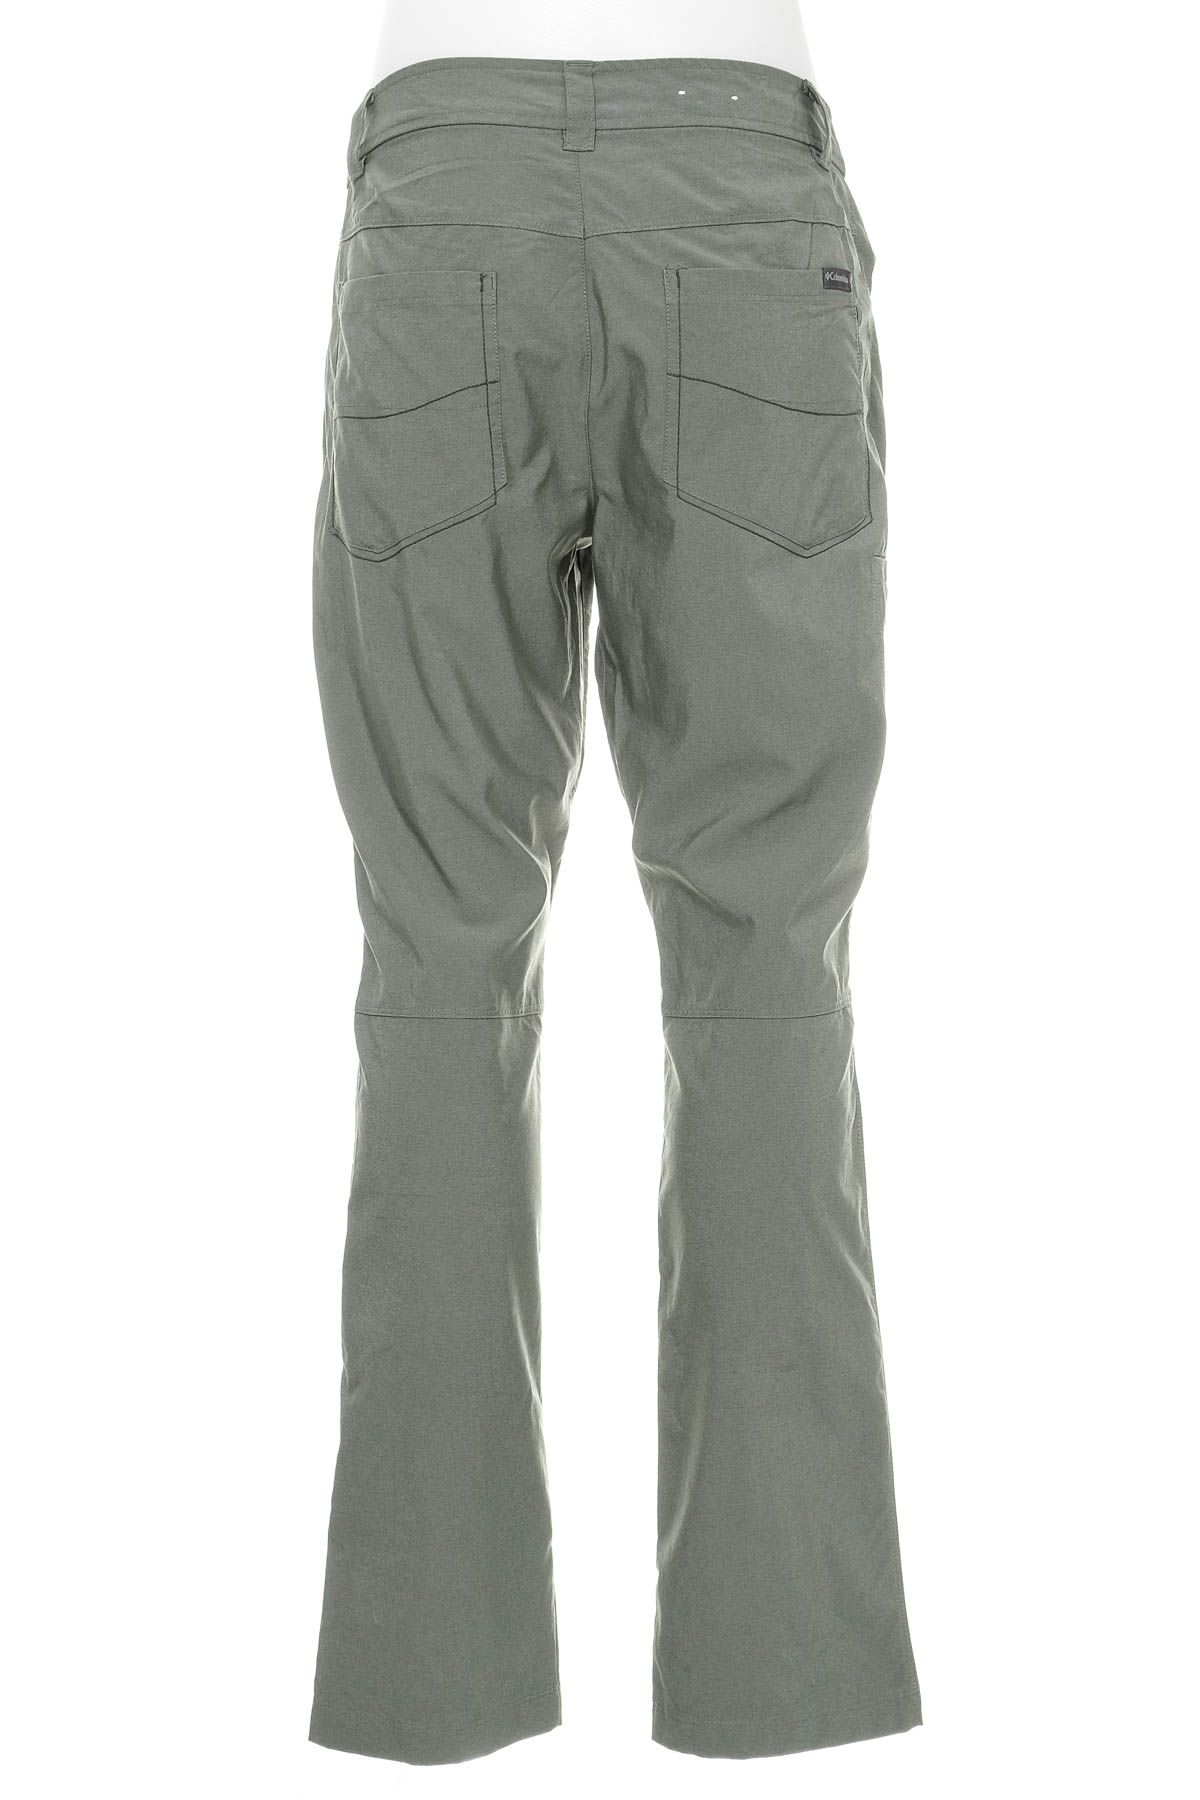 Men's trousers - Columbia - 1